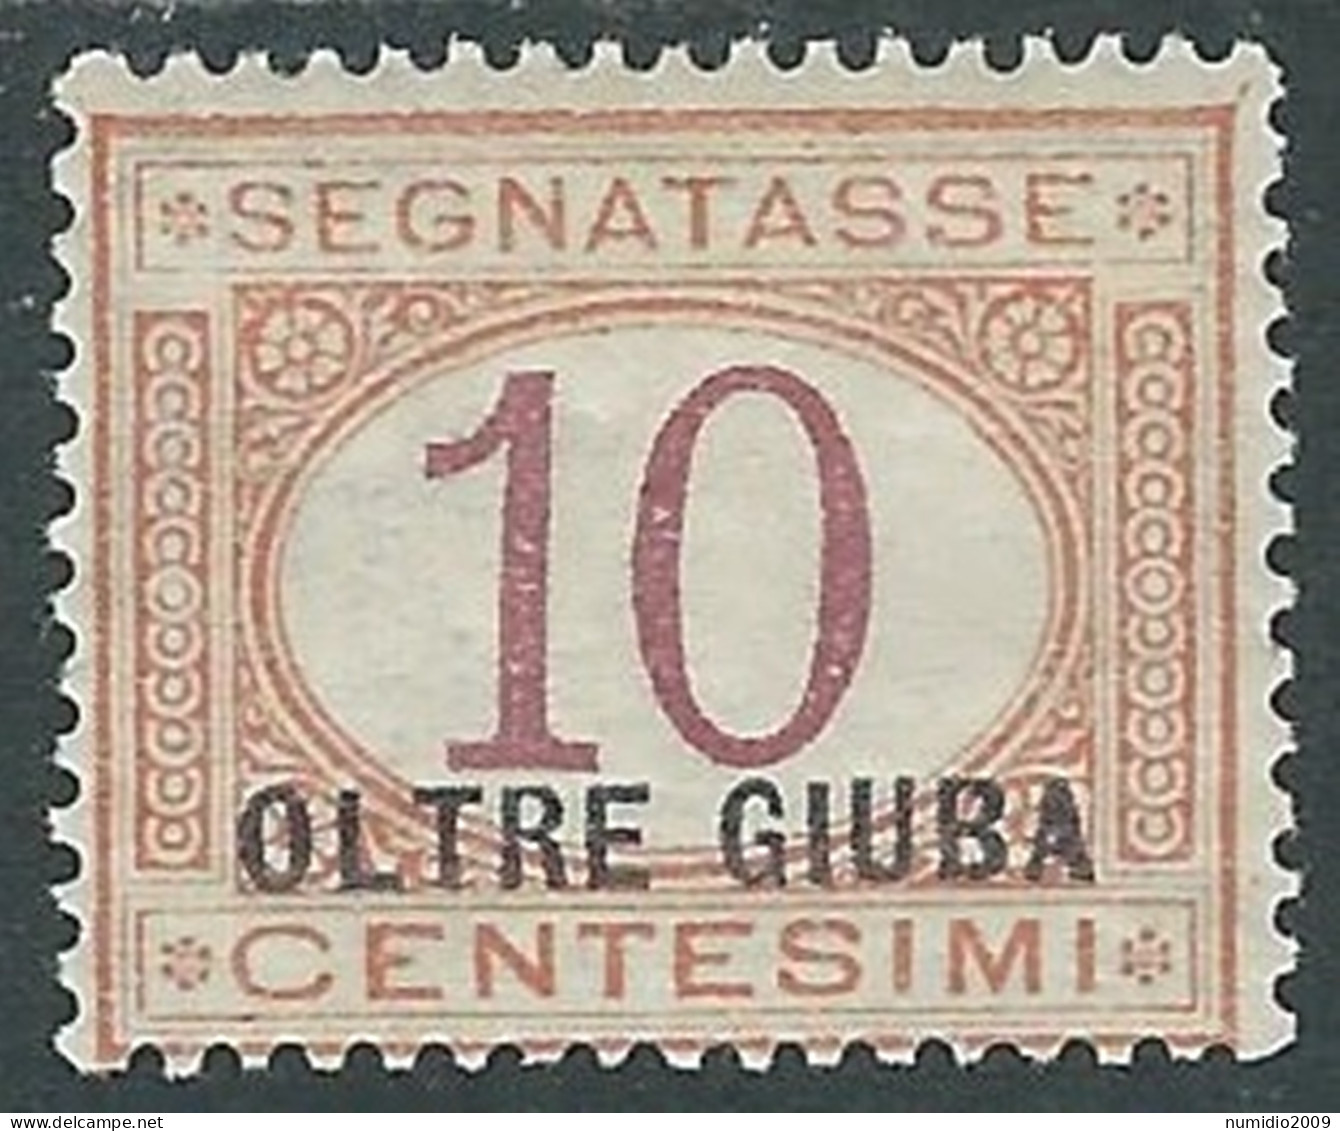 1925 OLTRE GIUBA SEGNATASSE 10 CENT MH * - I55-2 - Oltre Giuba